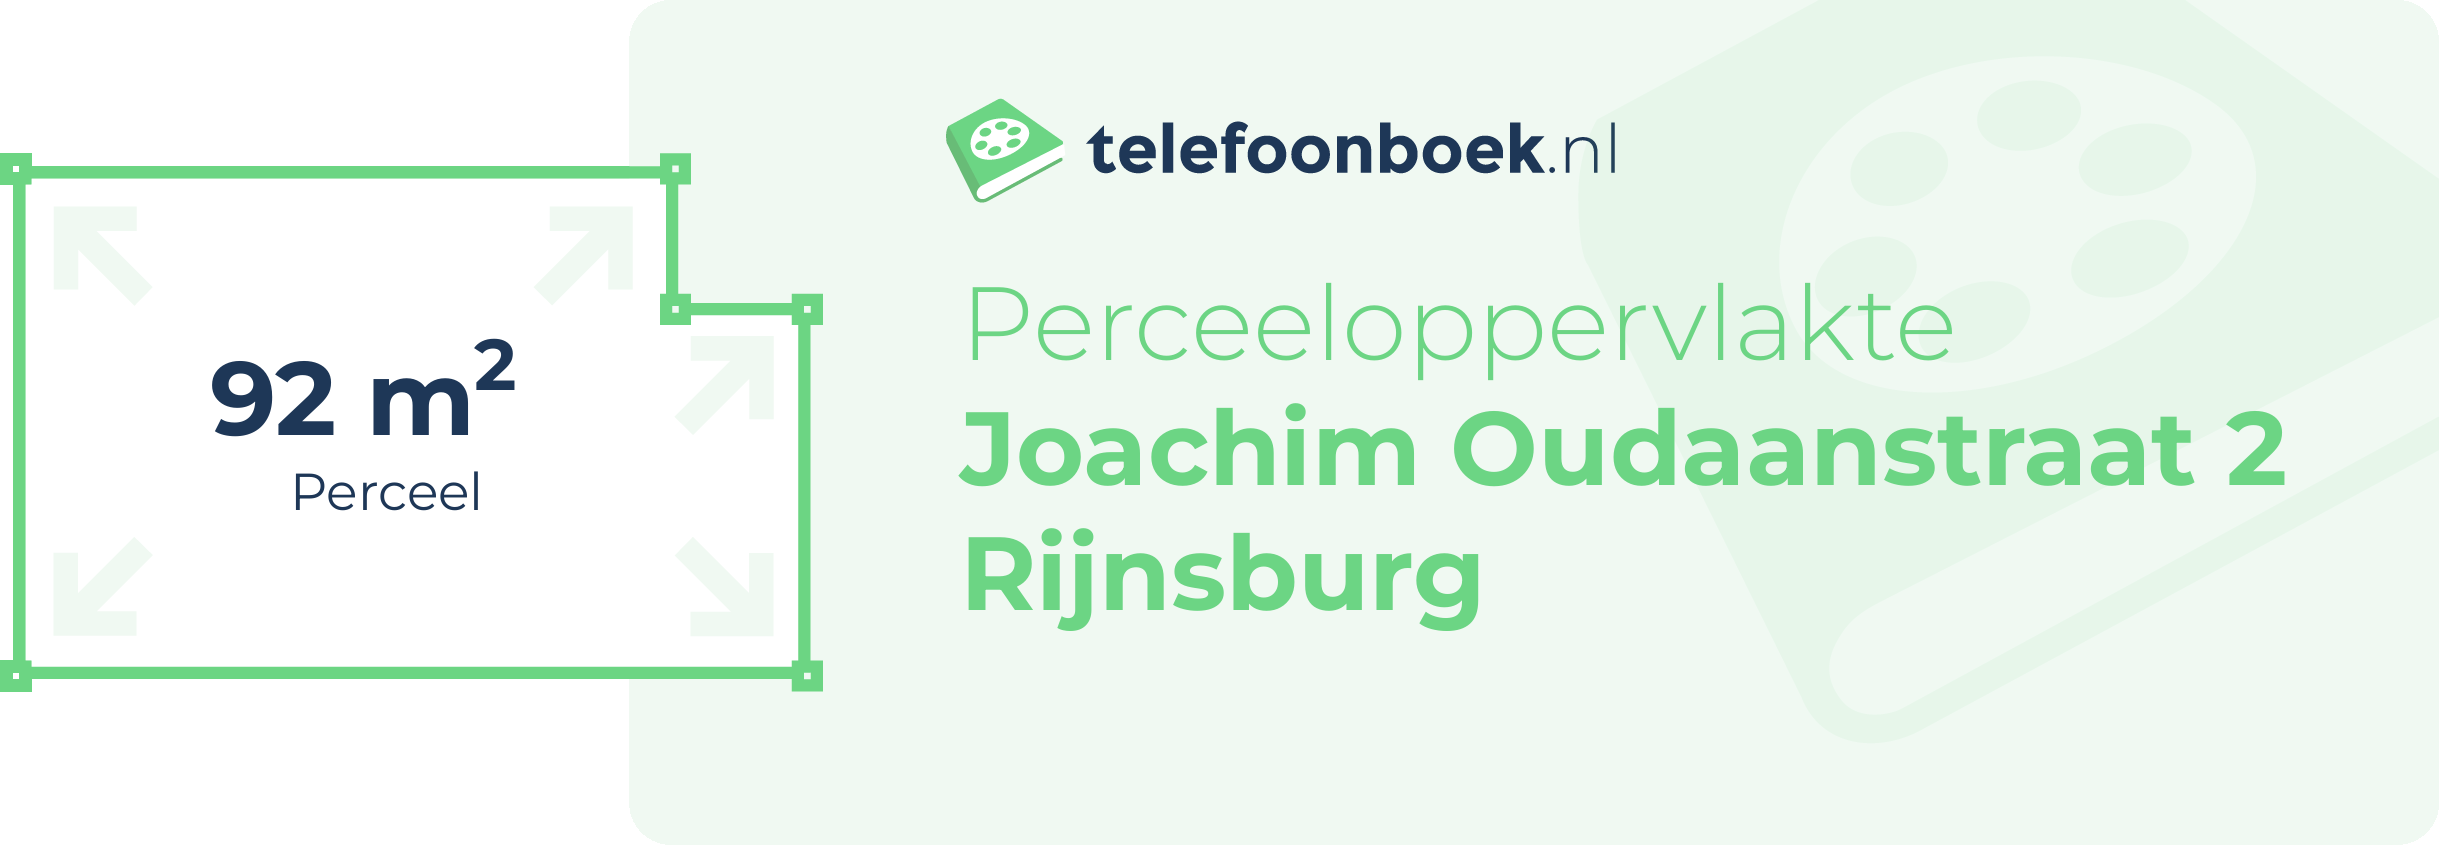 Perceeloppervlakte Joachim Oudaanstraat 2 Rijnsburg